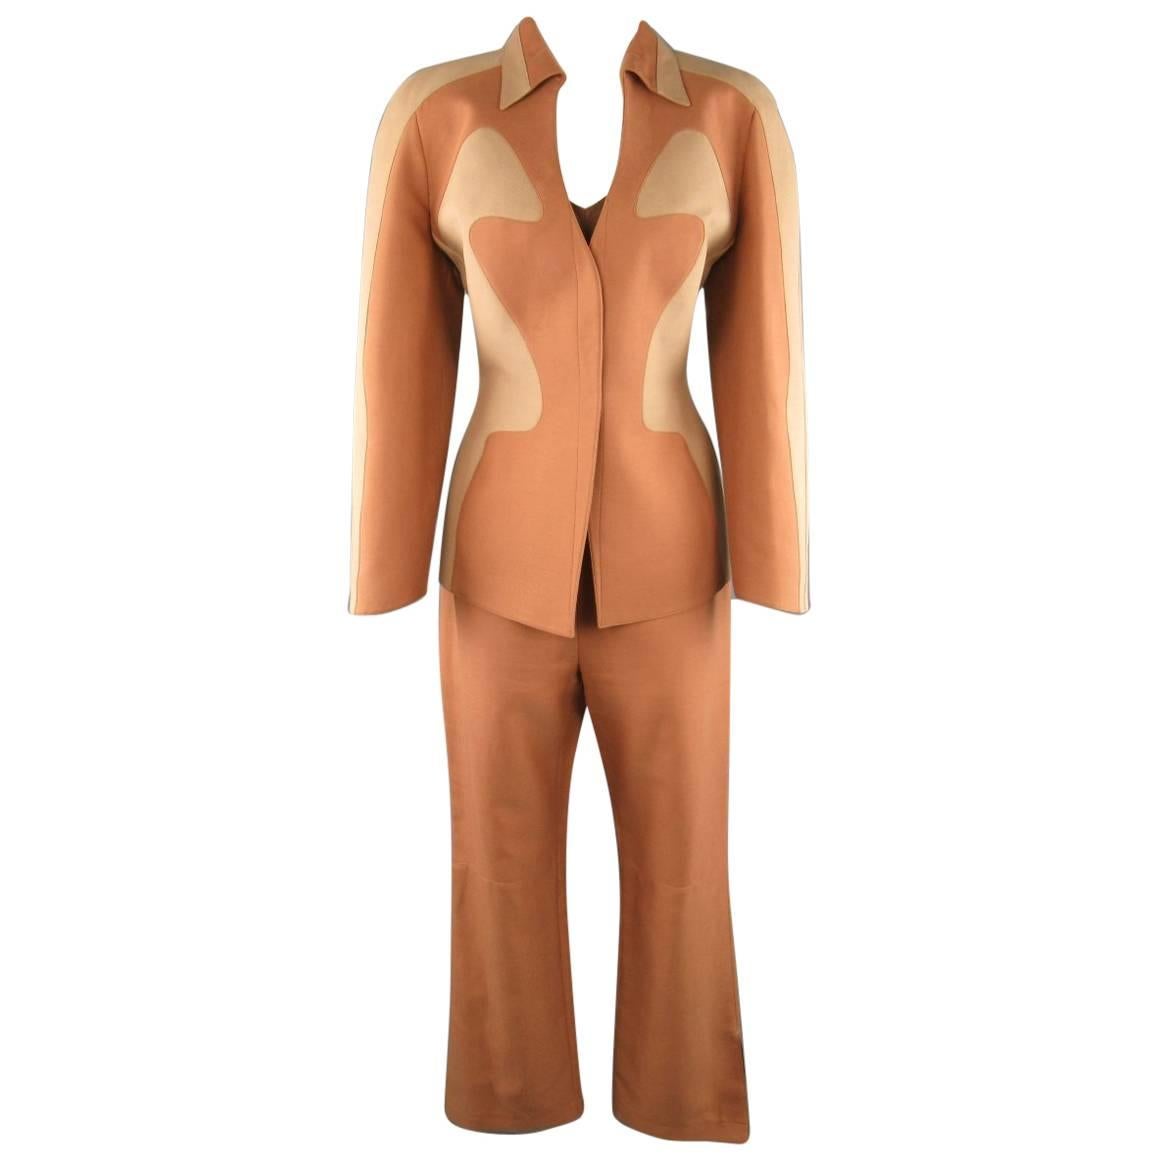 THIERRY MUGLER COUTURE 1980s Size 14 Tan & Beige Cotton 3 pc Pants Suit